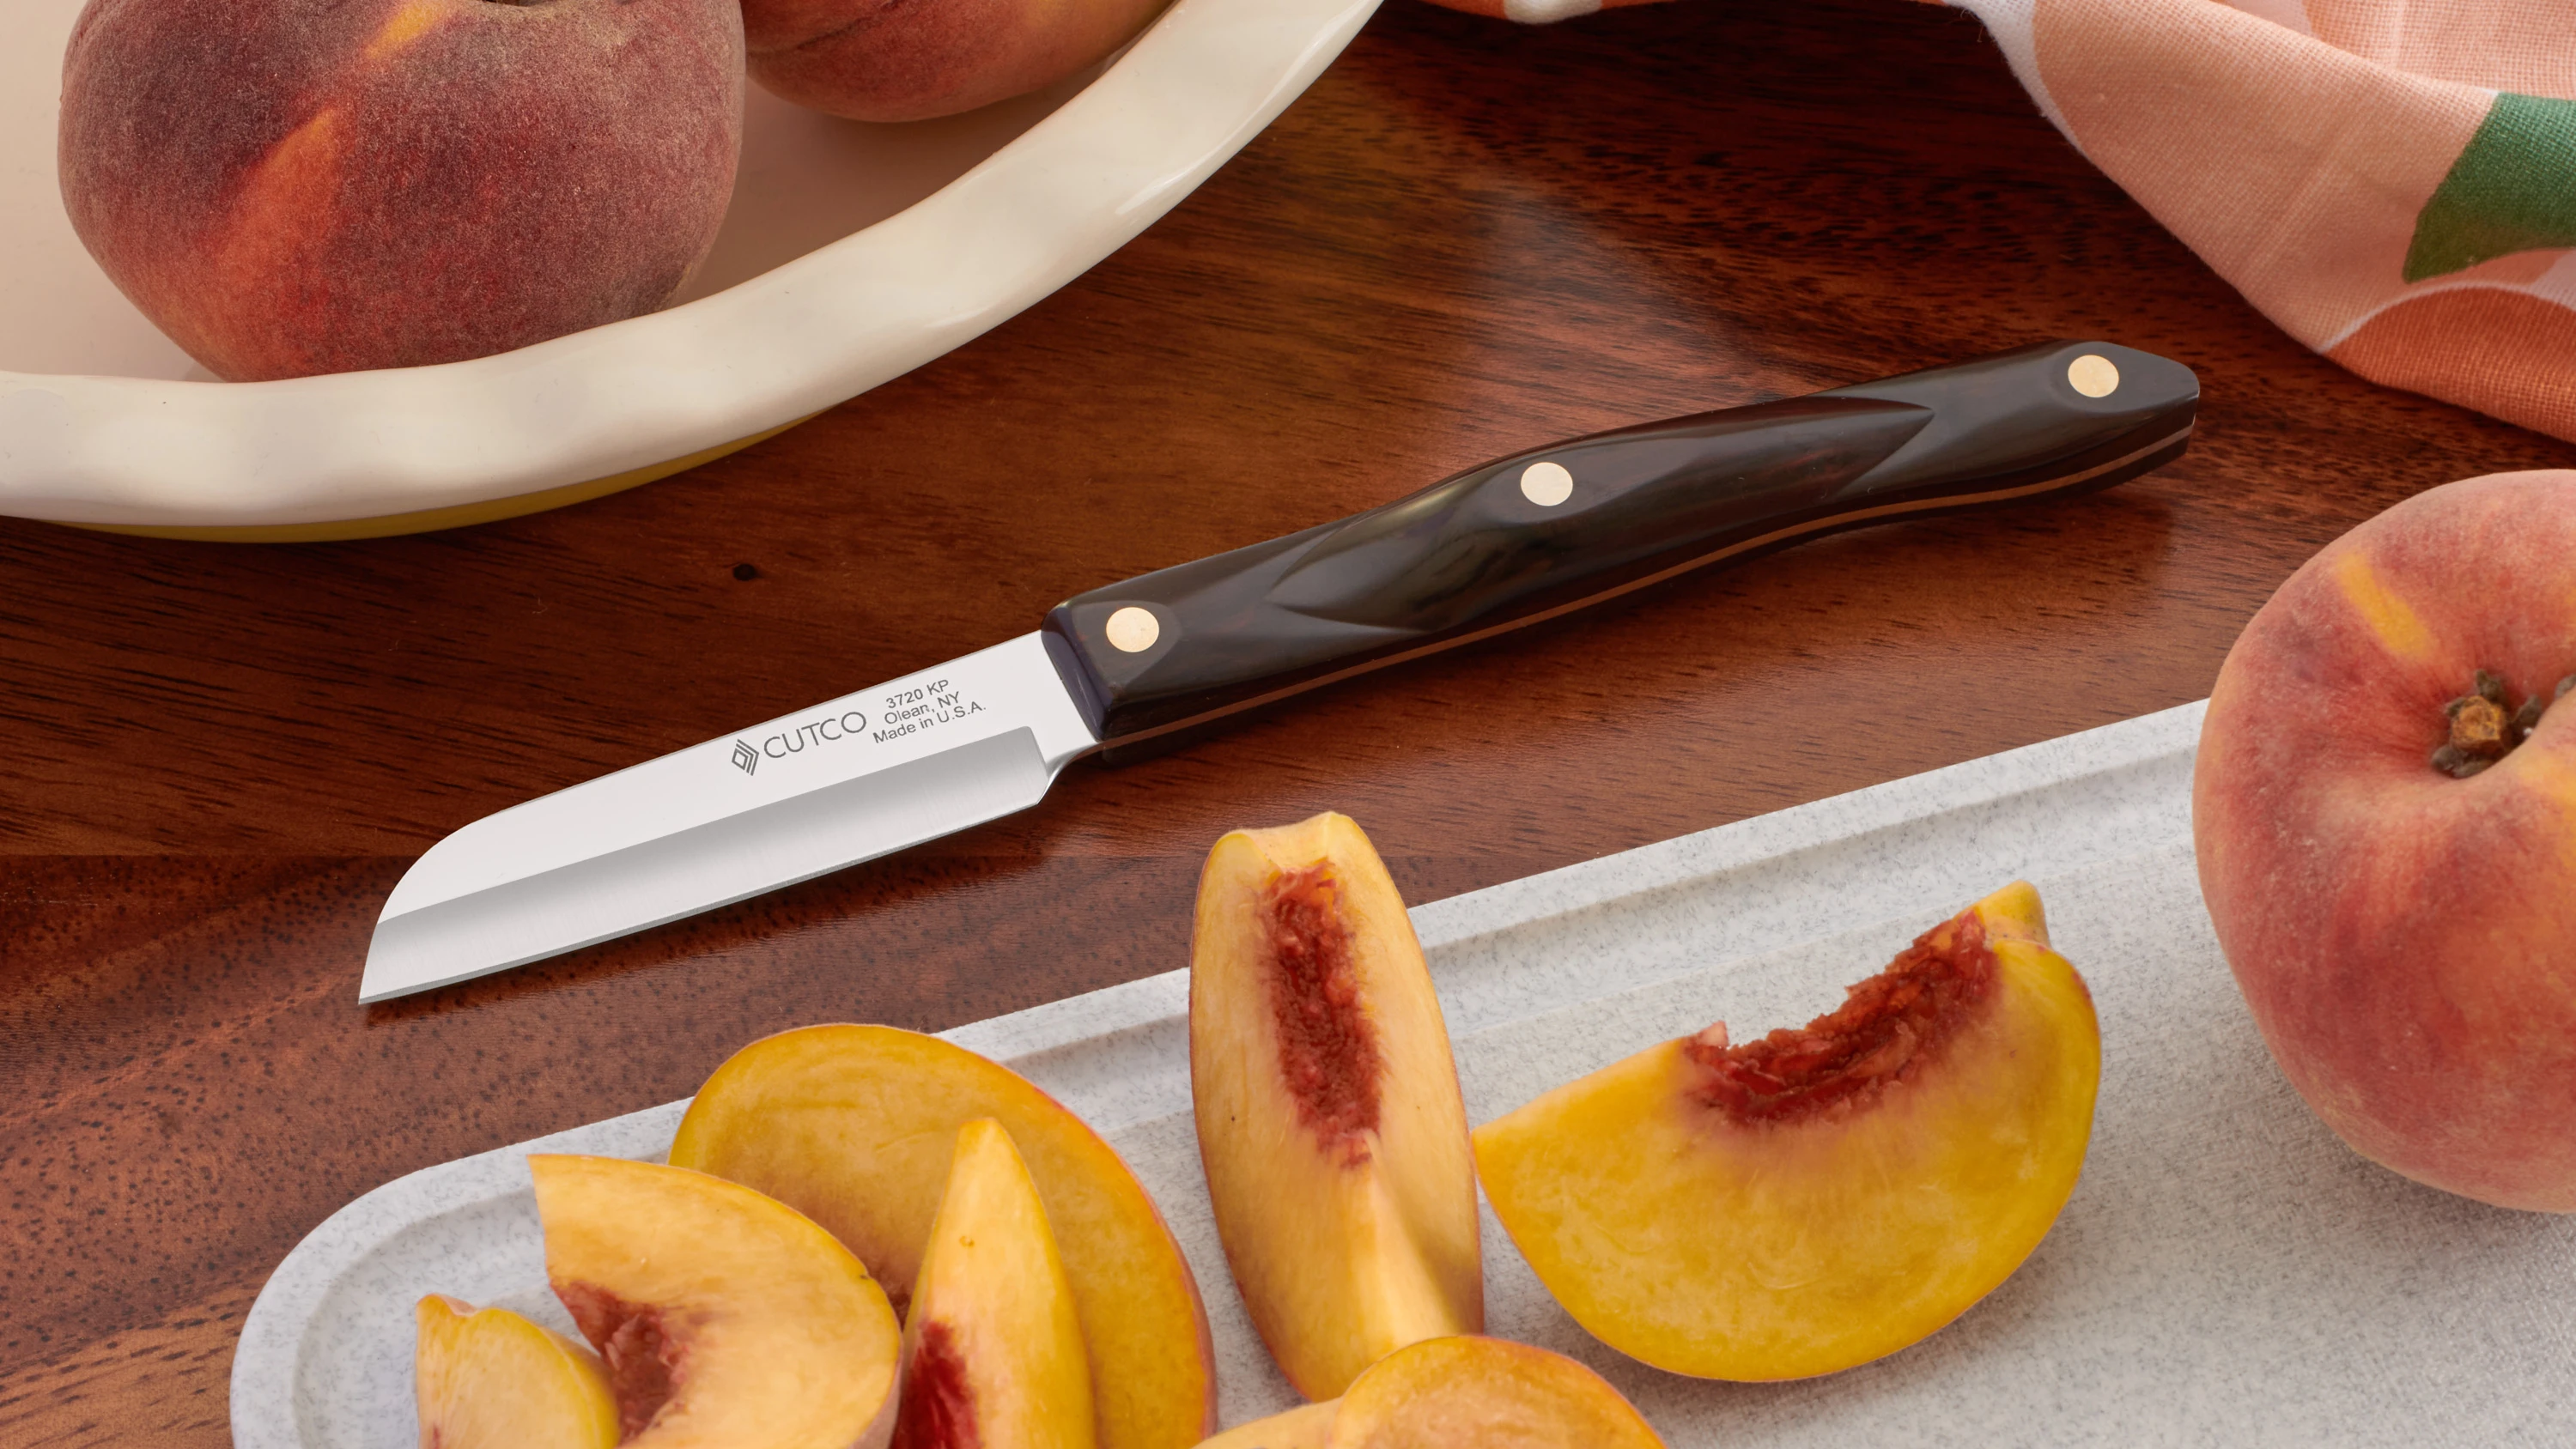  CuCut Kitchen Knife, 3 Pcs Knife Set with Multifunctional Kitchen  Scissors, Santoku Knife, Paring Knife, Black Knife Set for Chef Paring  Cutting Slicing Dishwasher Safe (Anti-Slip Handle): Home & Kitchen